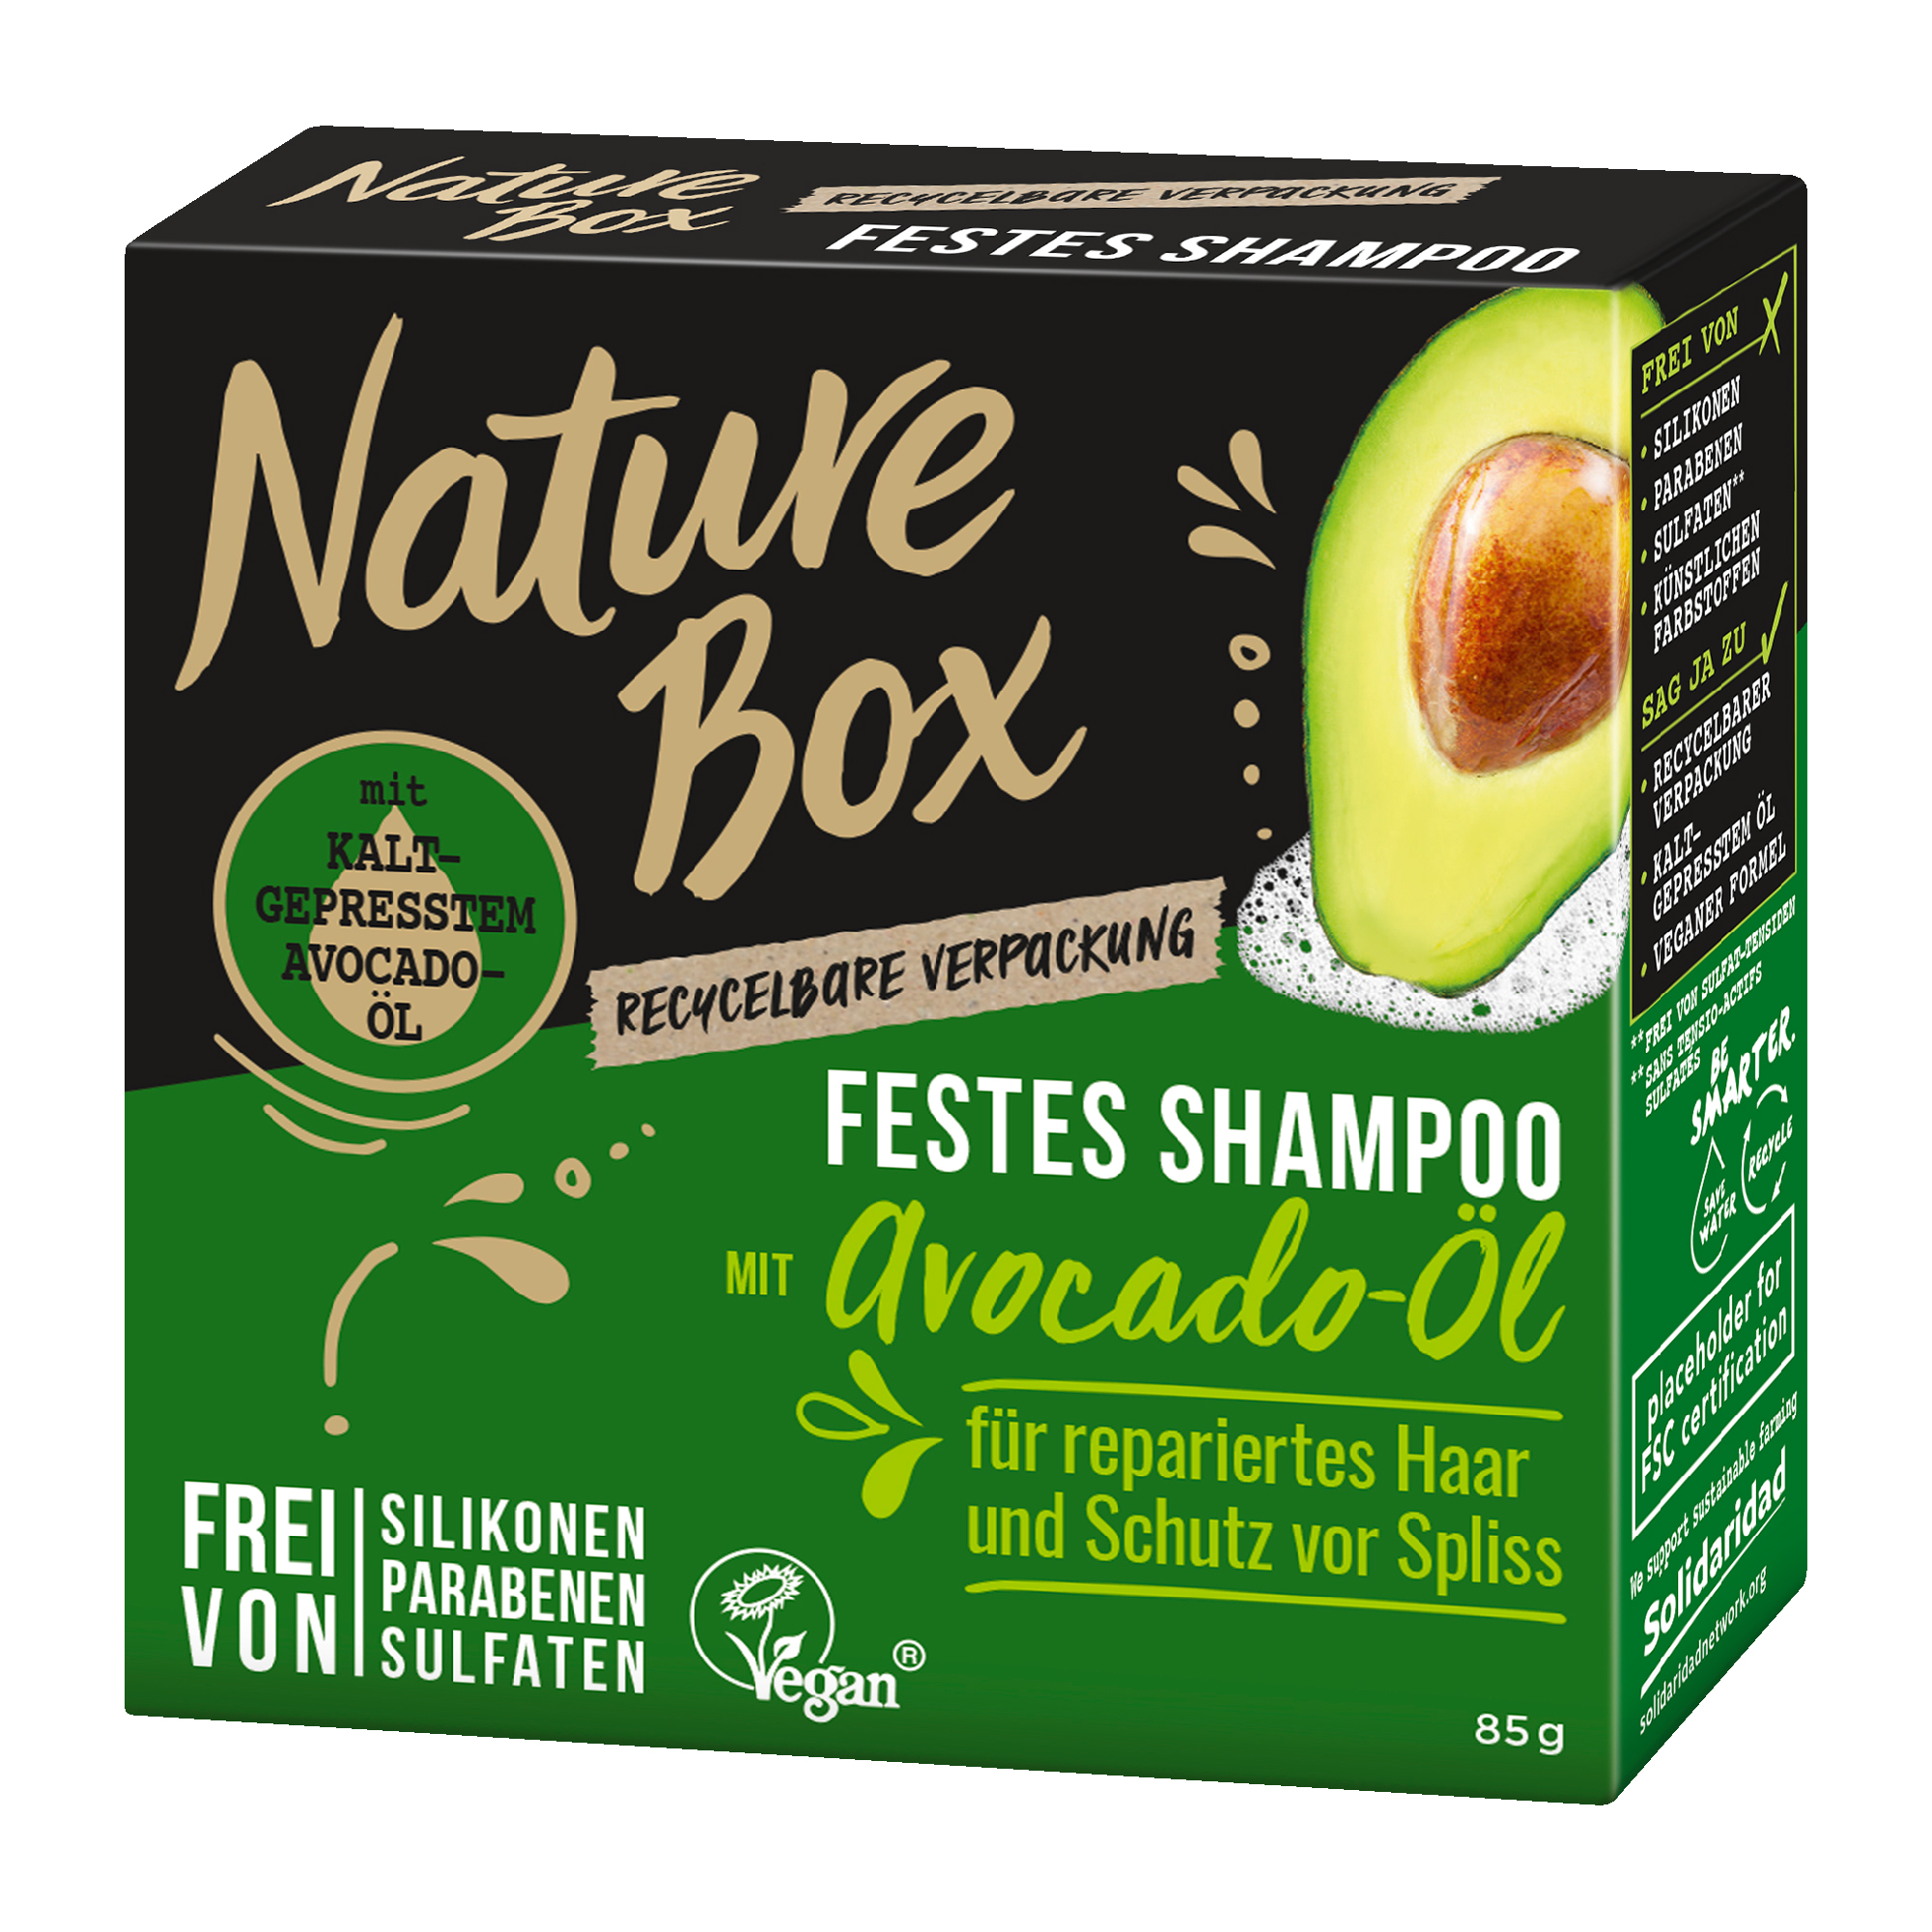 Natural box. Nature Box шампуни. Шампунь авокадо натуре бокс. Nature Box Haarkur hair shot Reparatur mit Avocado-Öl, 60 ml.